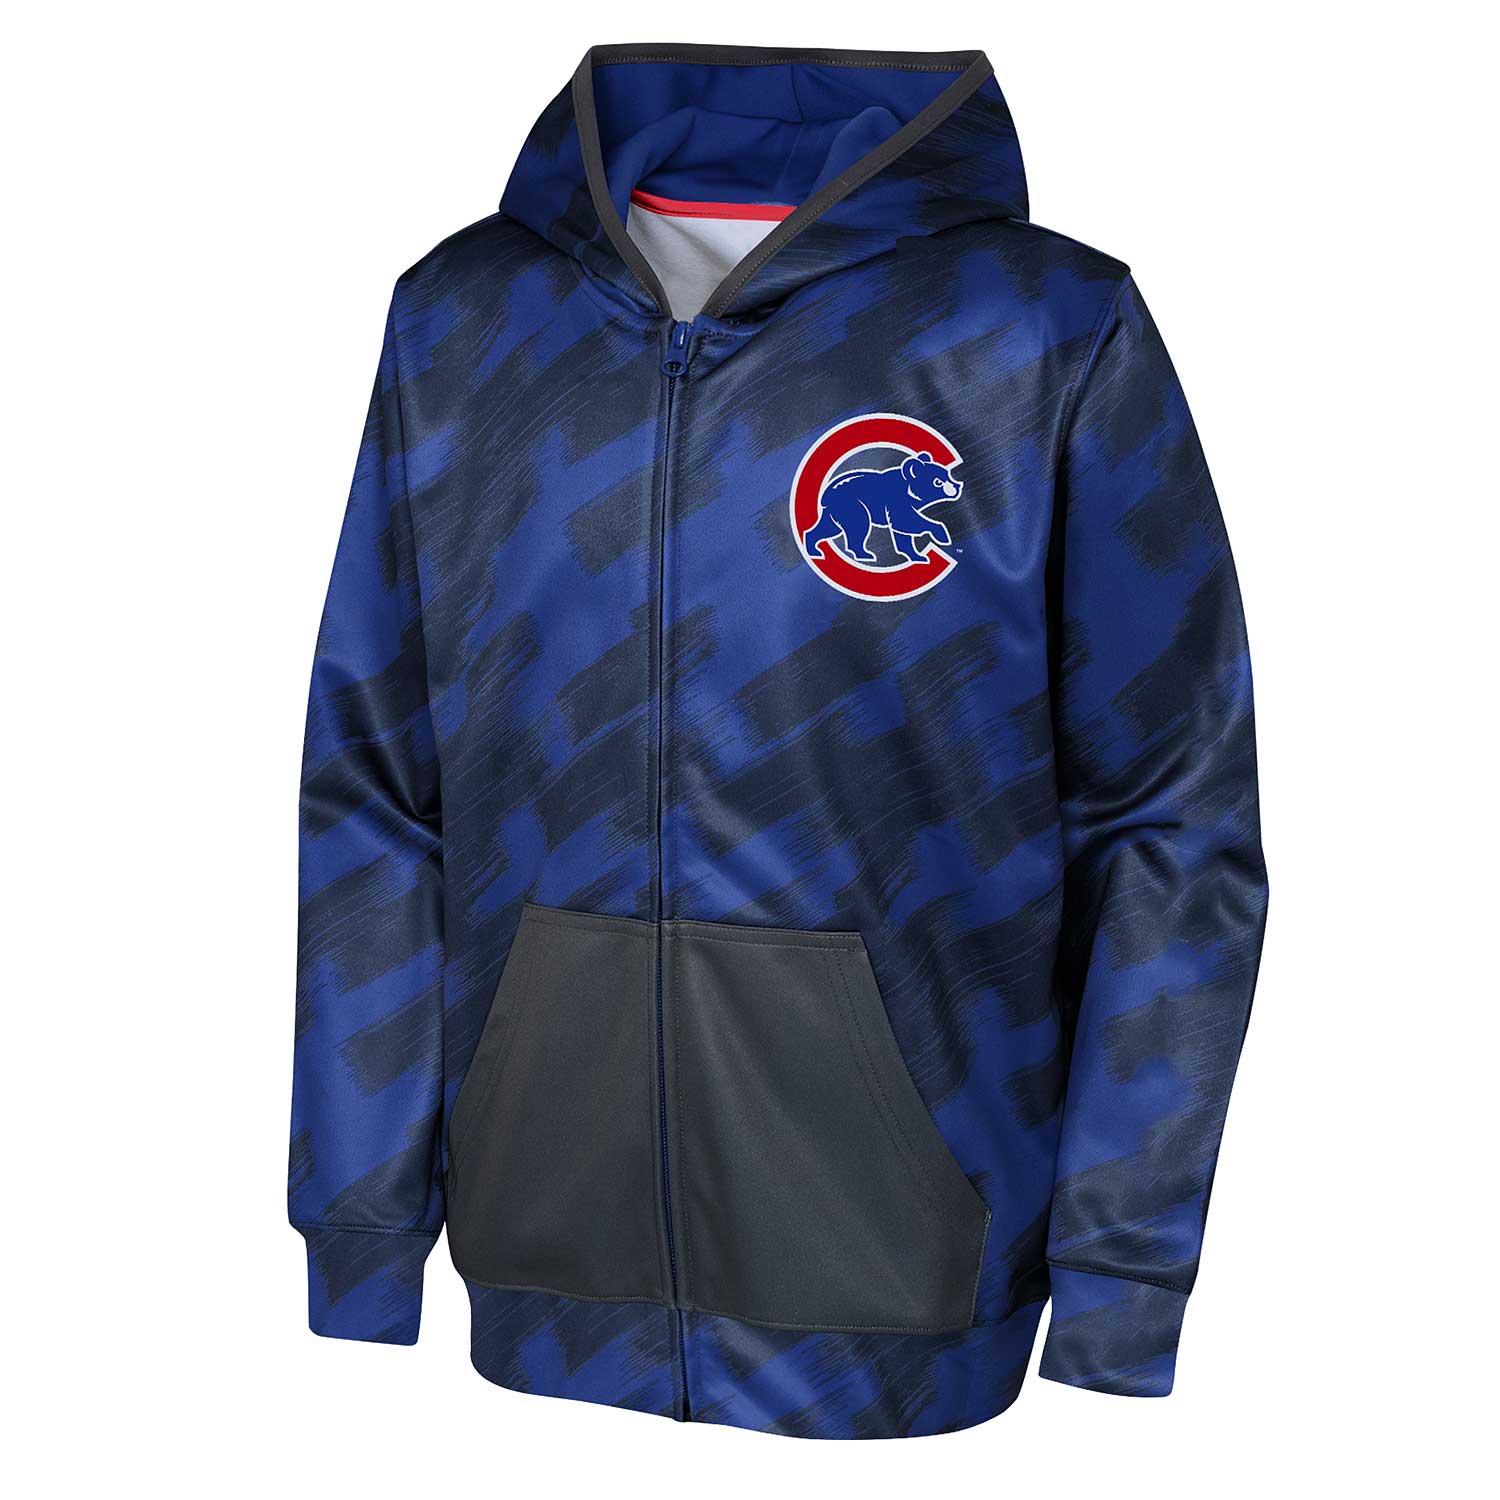 Outerstuff Chicago Cubs Youth Ticker Tape Full-Zip Hooded Sweatshirt Medium = 10-12